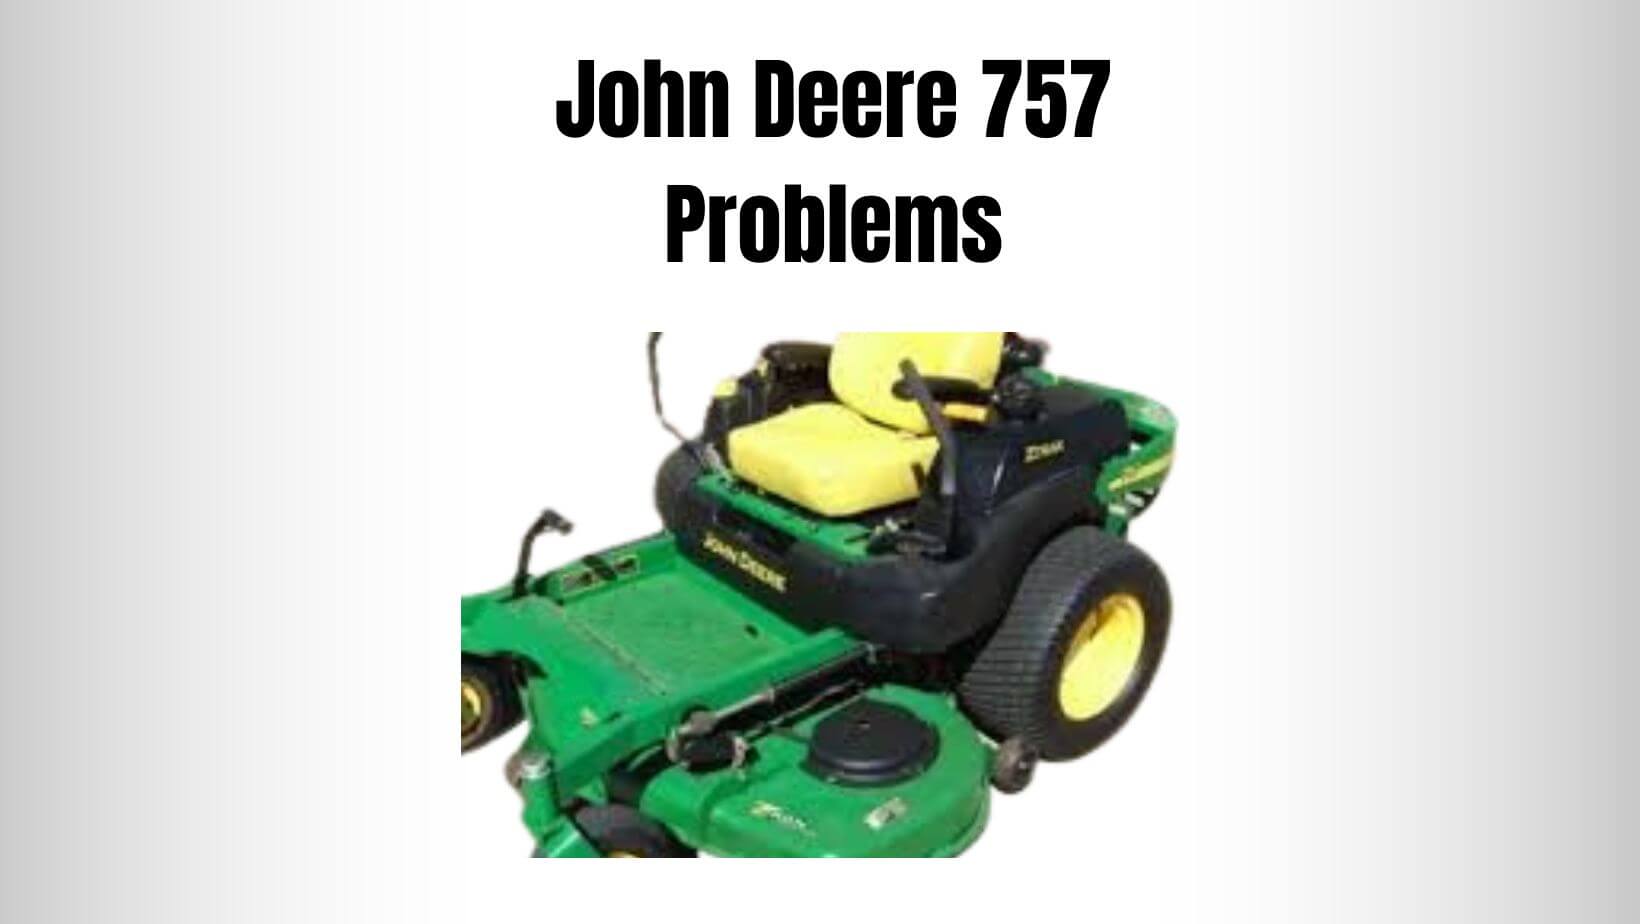 John Deere 757 Problems